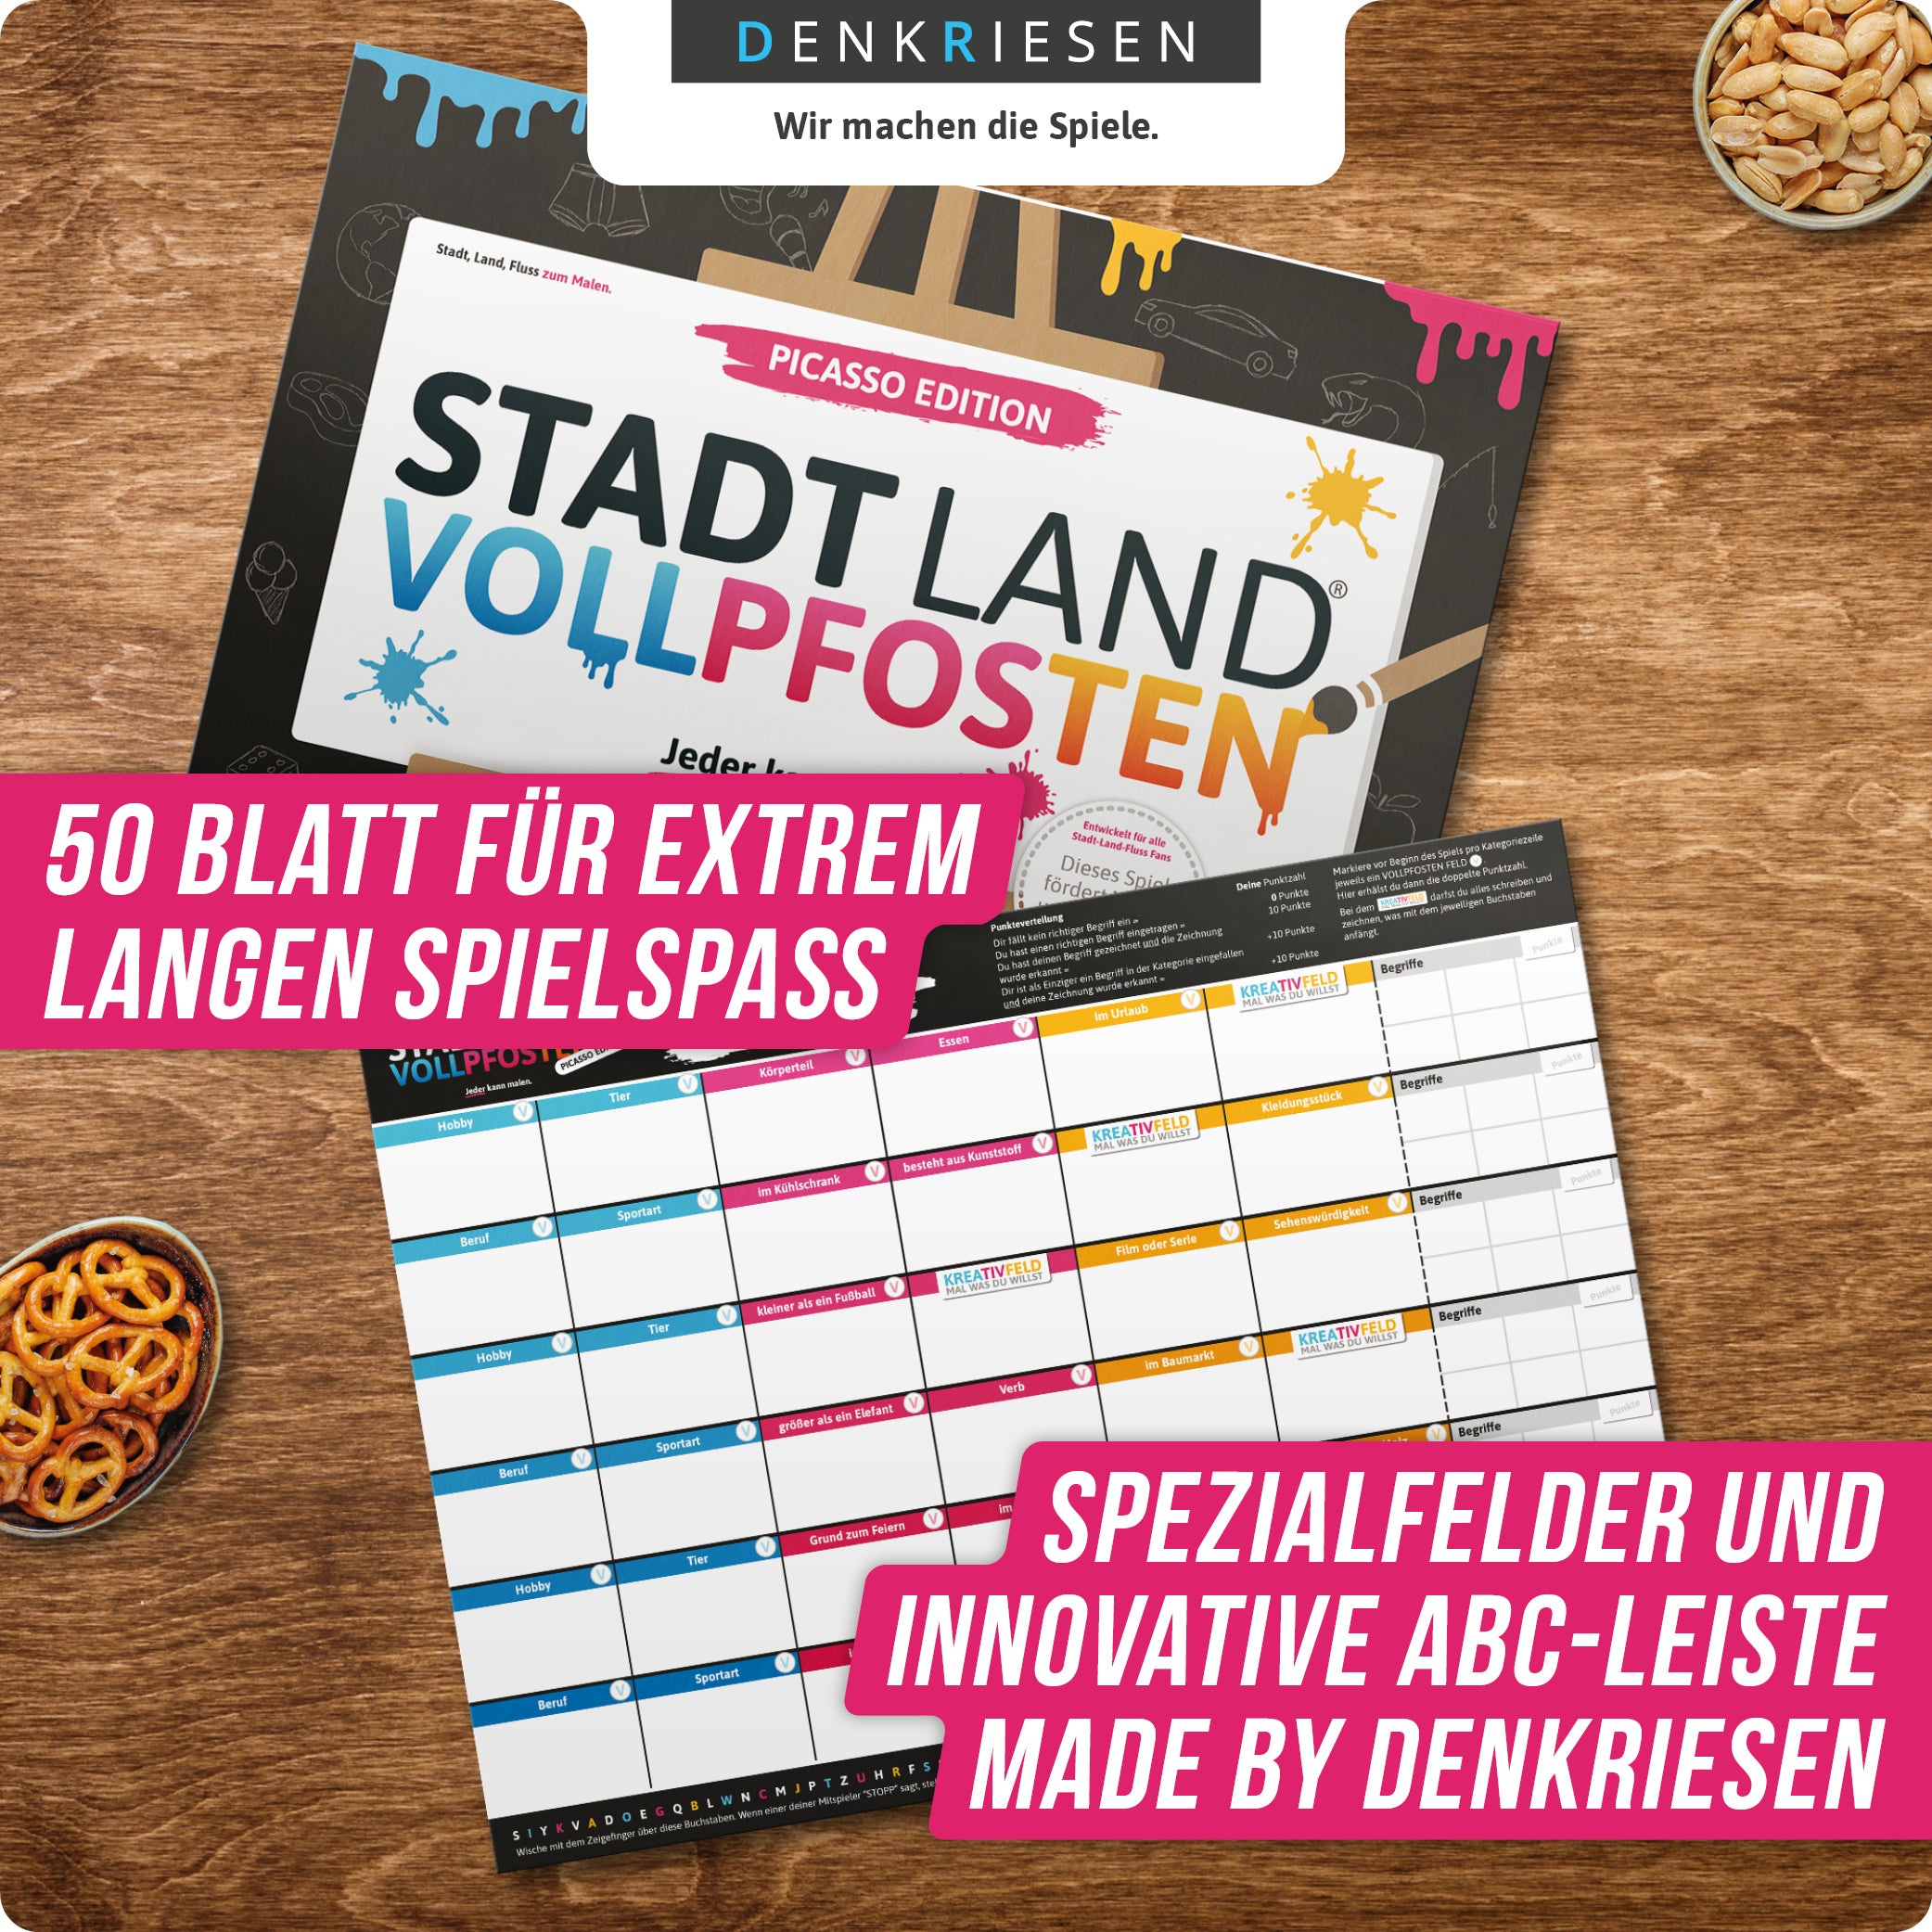 Stadt Land Vollpfosten - Picasso Edition | DinA3 Format